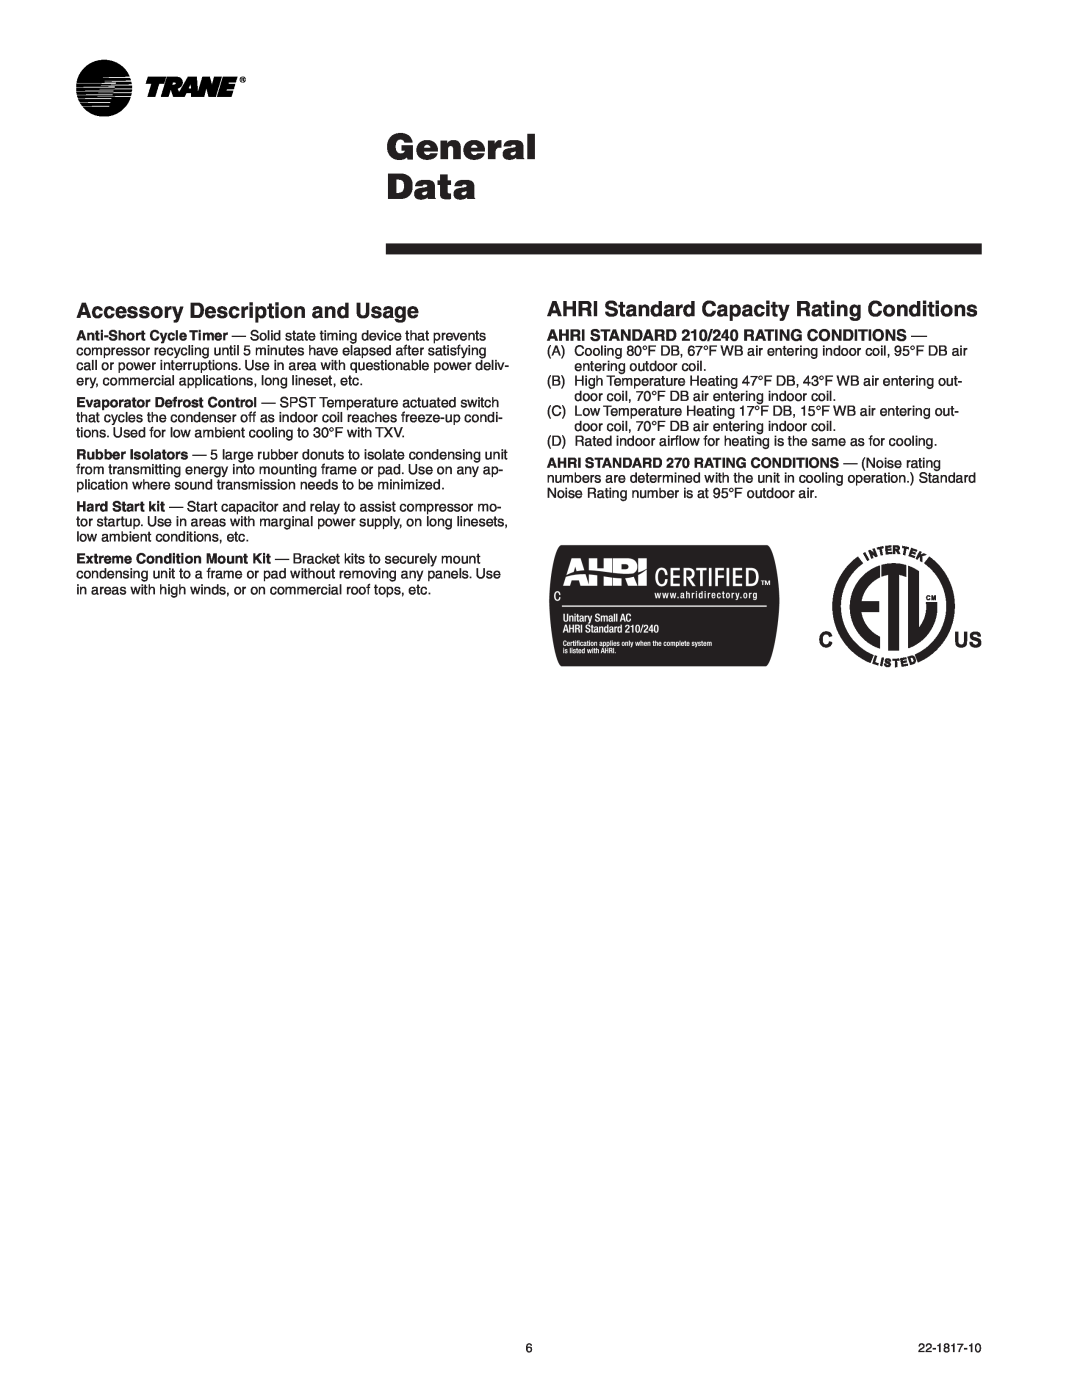 Trane 4TTX5024A1, 4TTX5061E, 049E General Data, Accessory Description and Usage, AHRI Standard Capacity Rating Conditions 